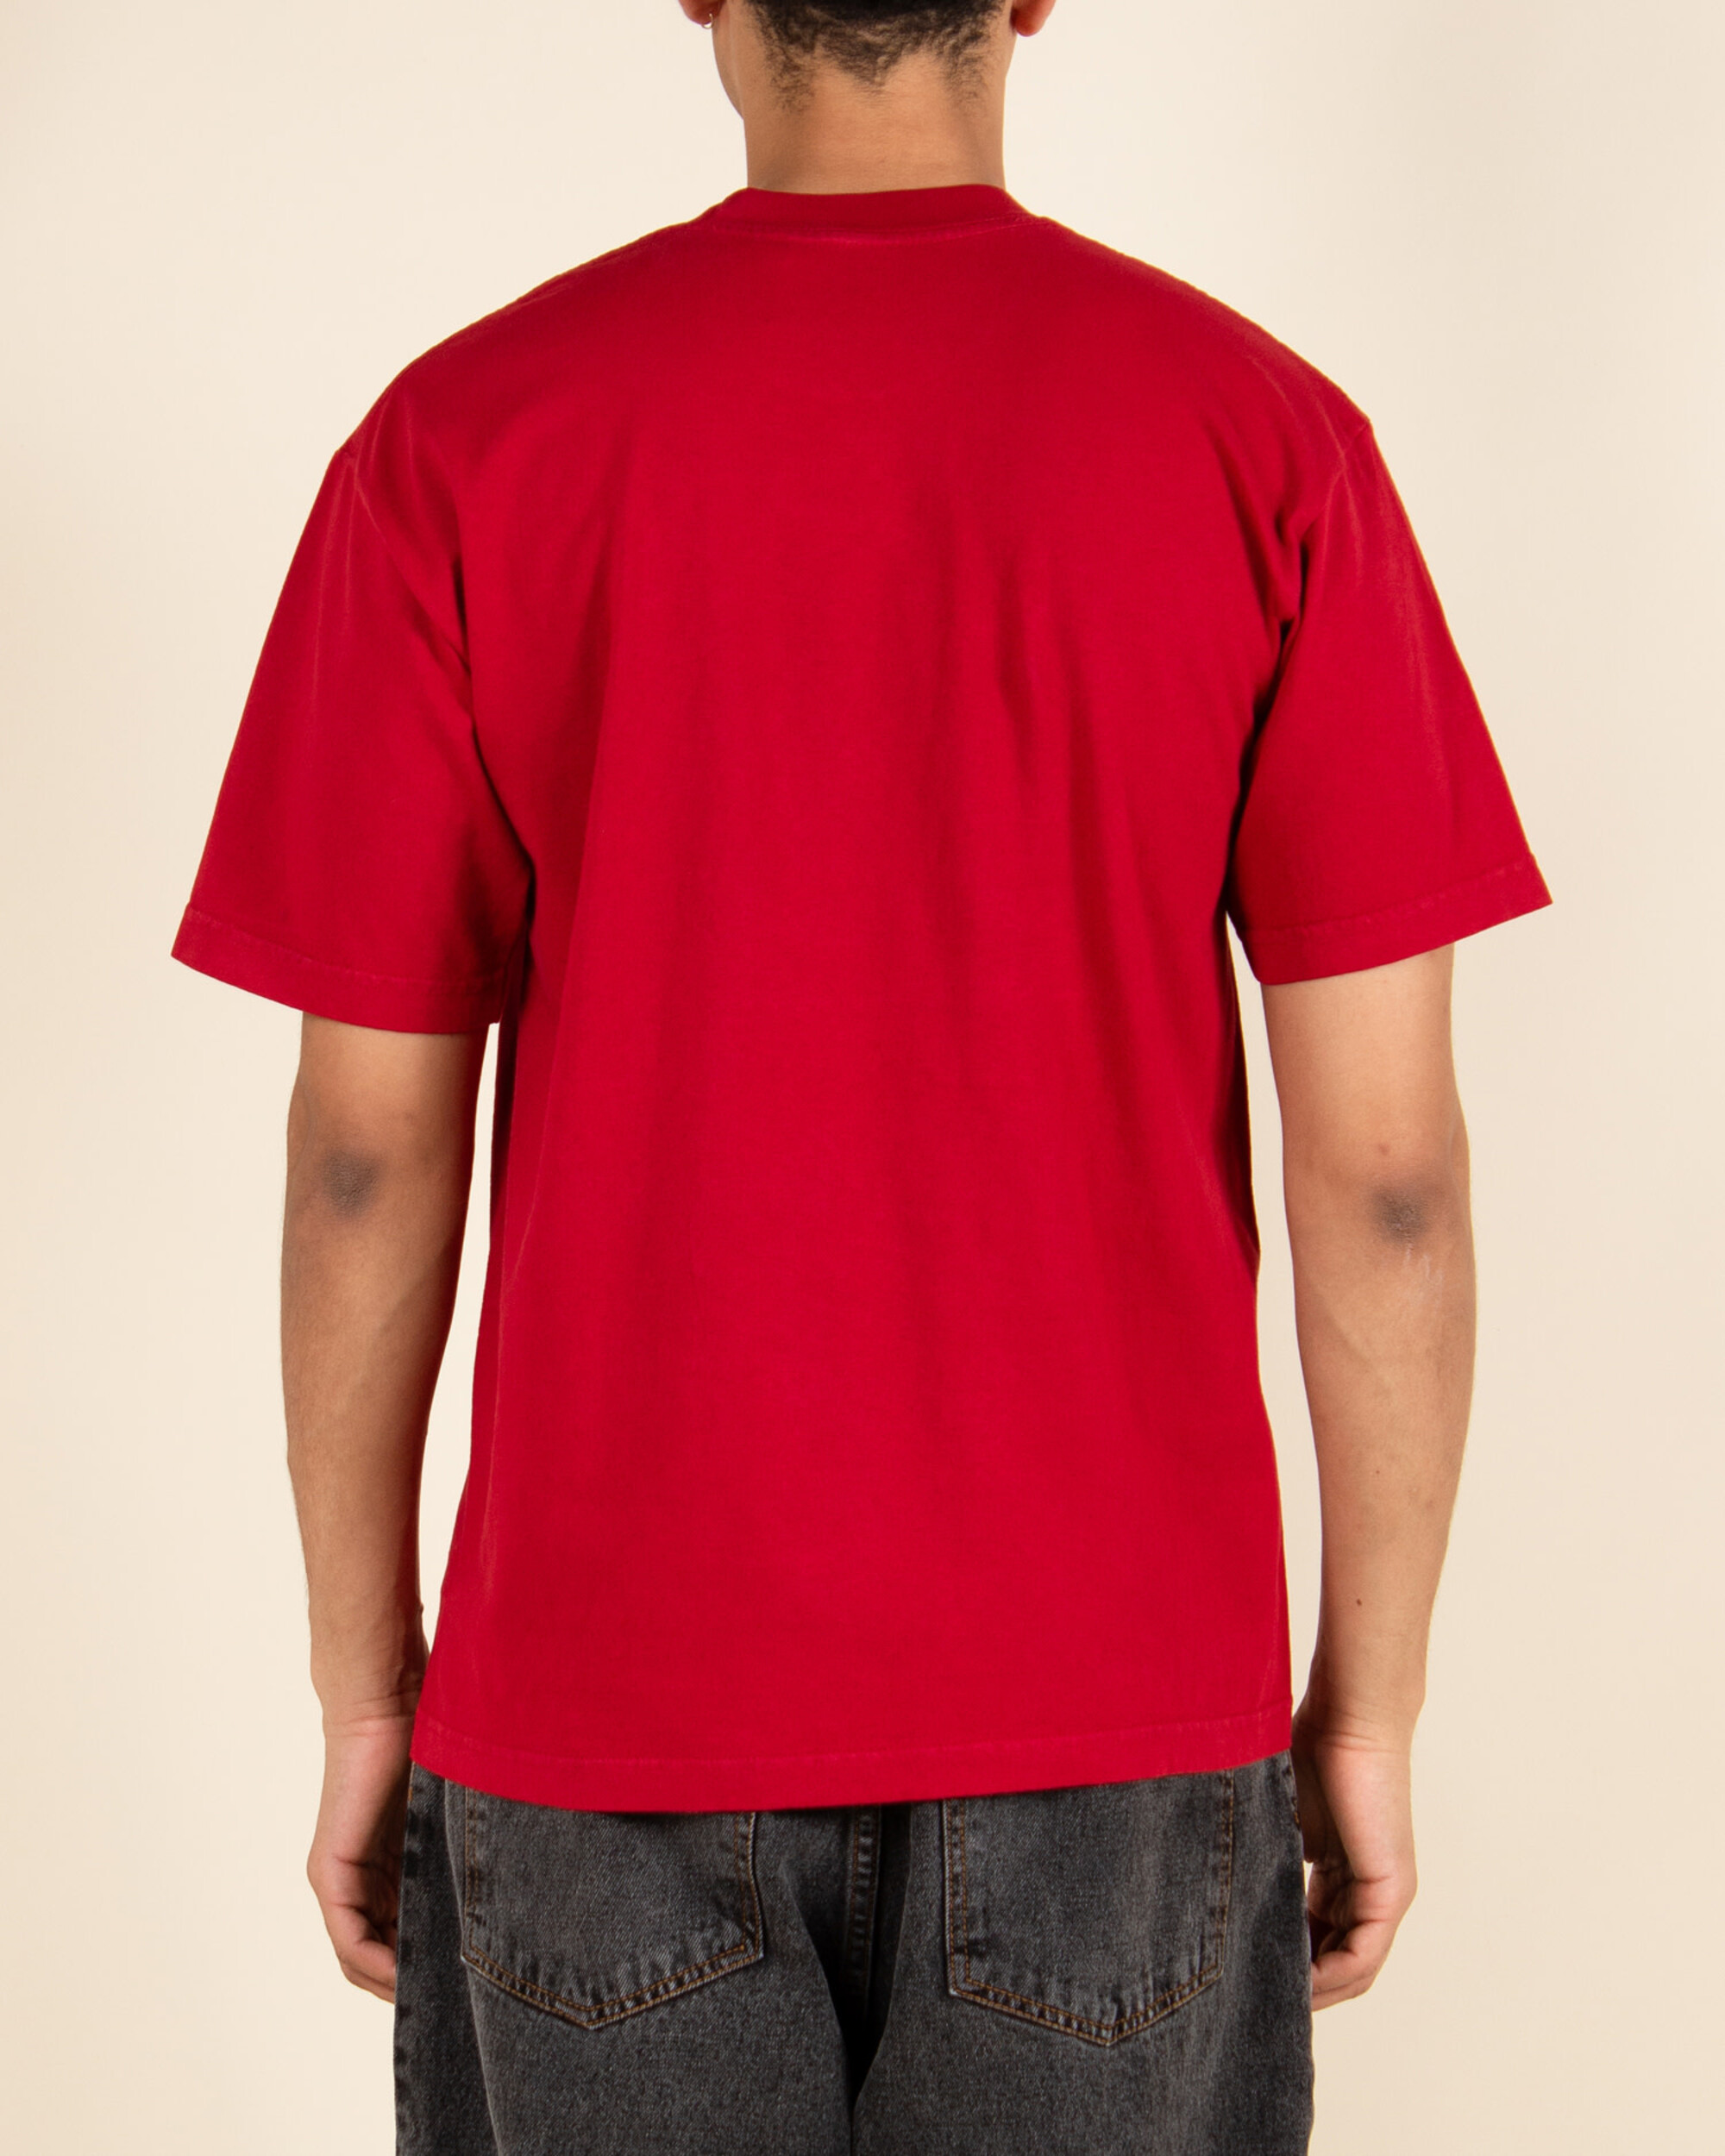 Bye Jeremy Butterfly T-shirt - Red